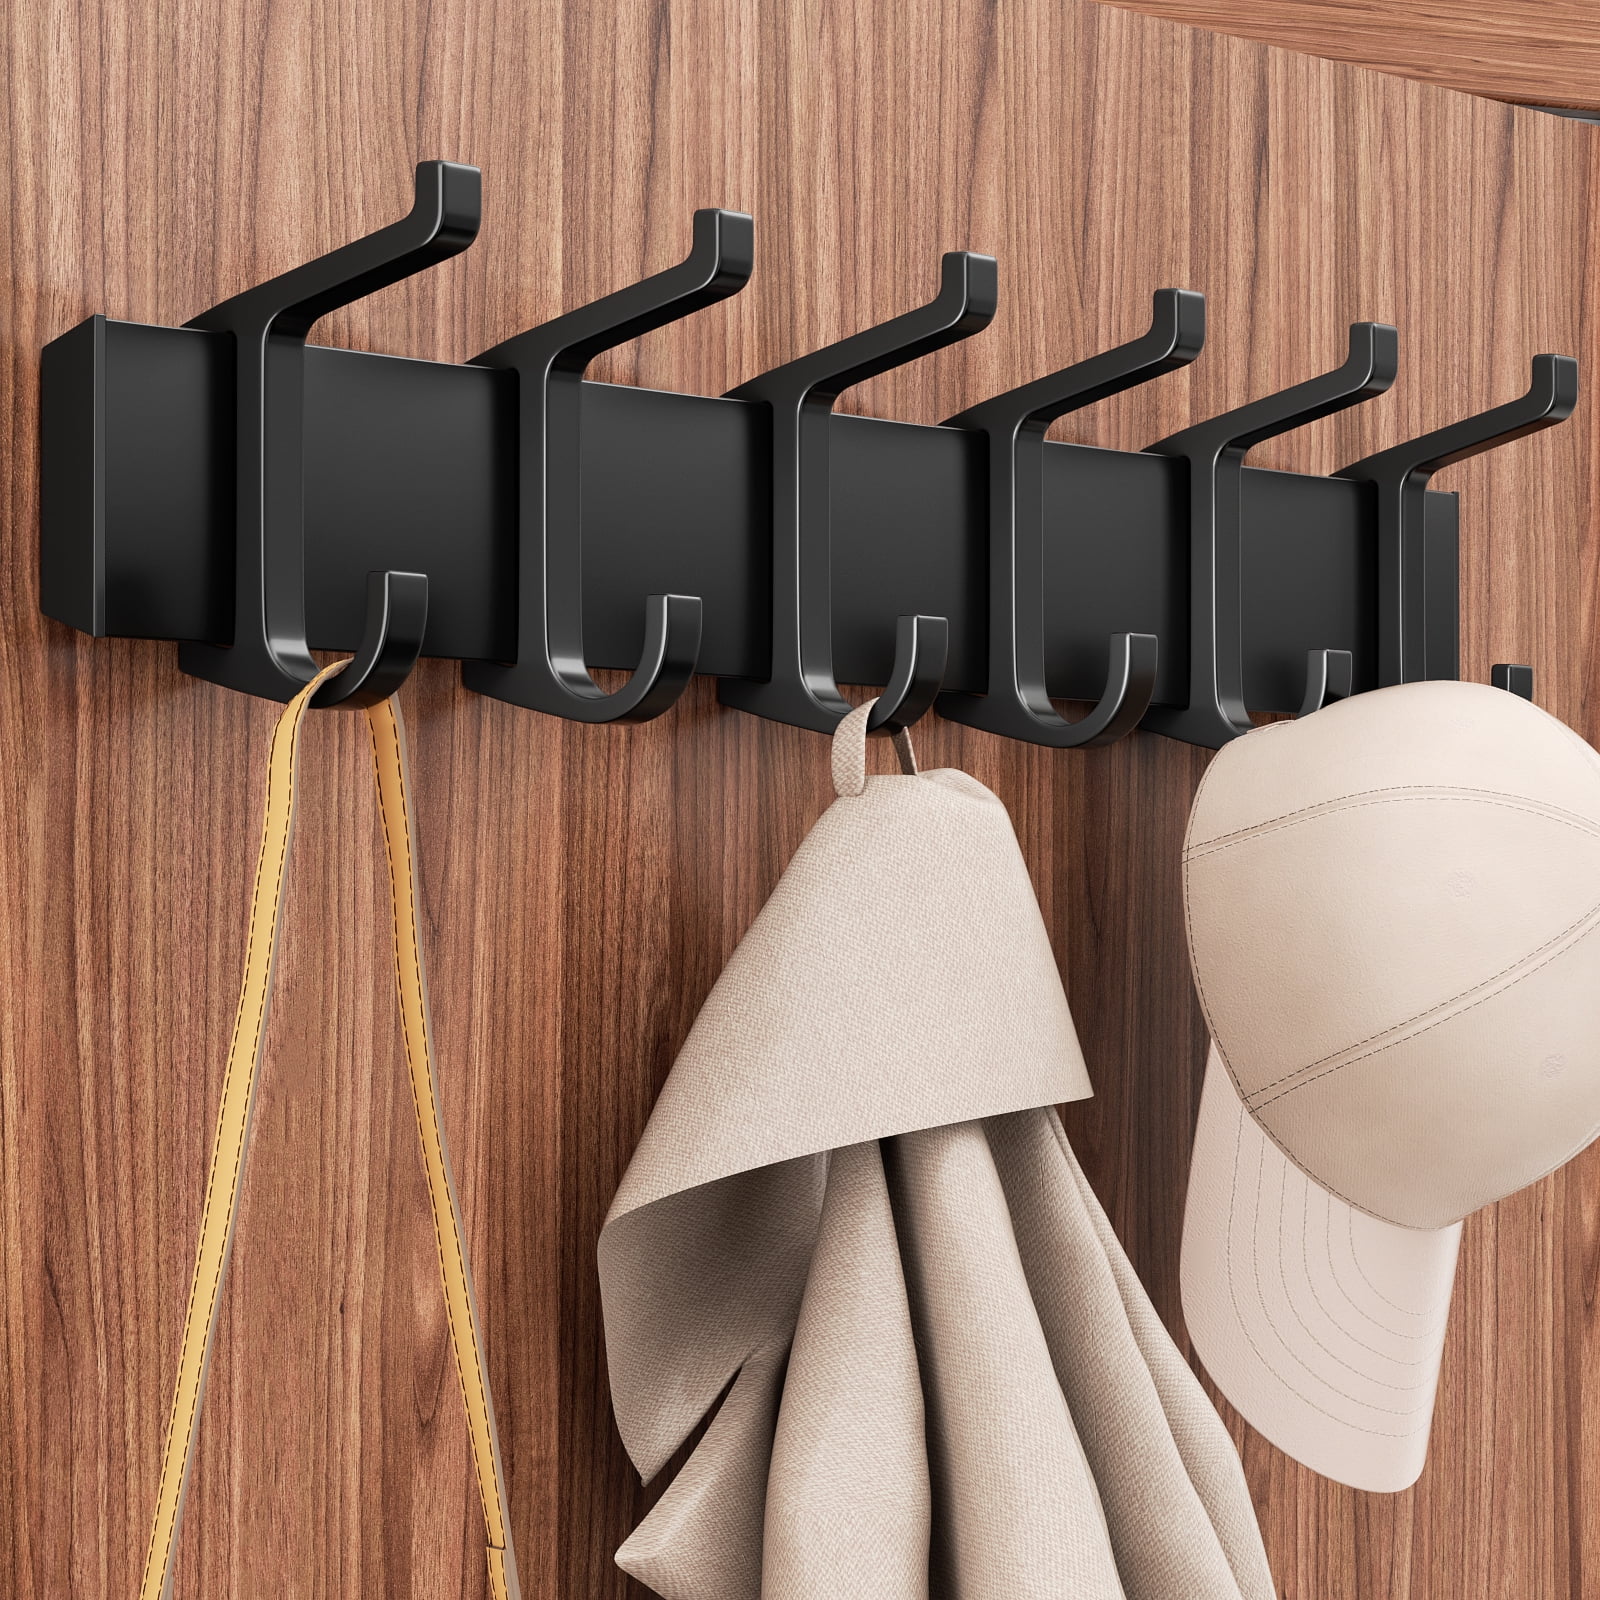 CREATCABIN Key Holder Decorative Coat Hooks Wall Mounted Metal Key Hooks  Towel Racks with 6 Hooks Butterfly Design Iron Key Hanger for Wall,  Bathroom